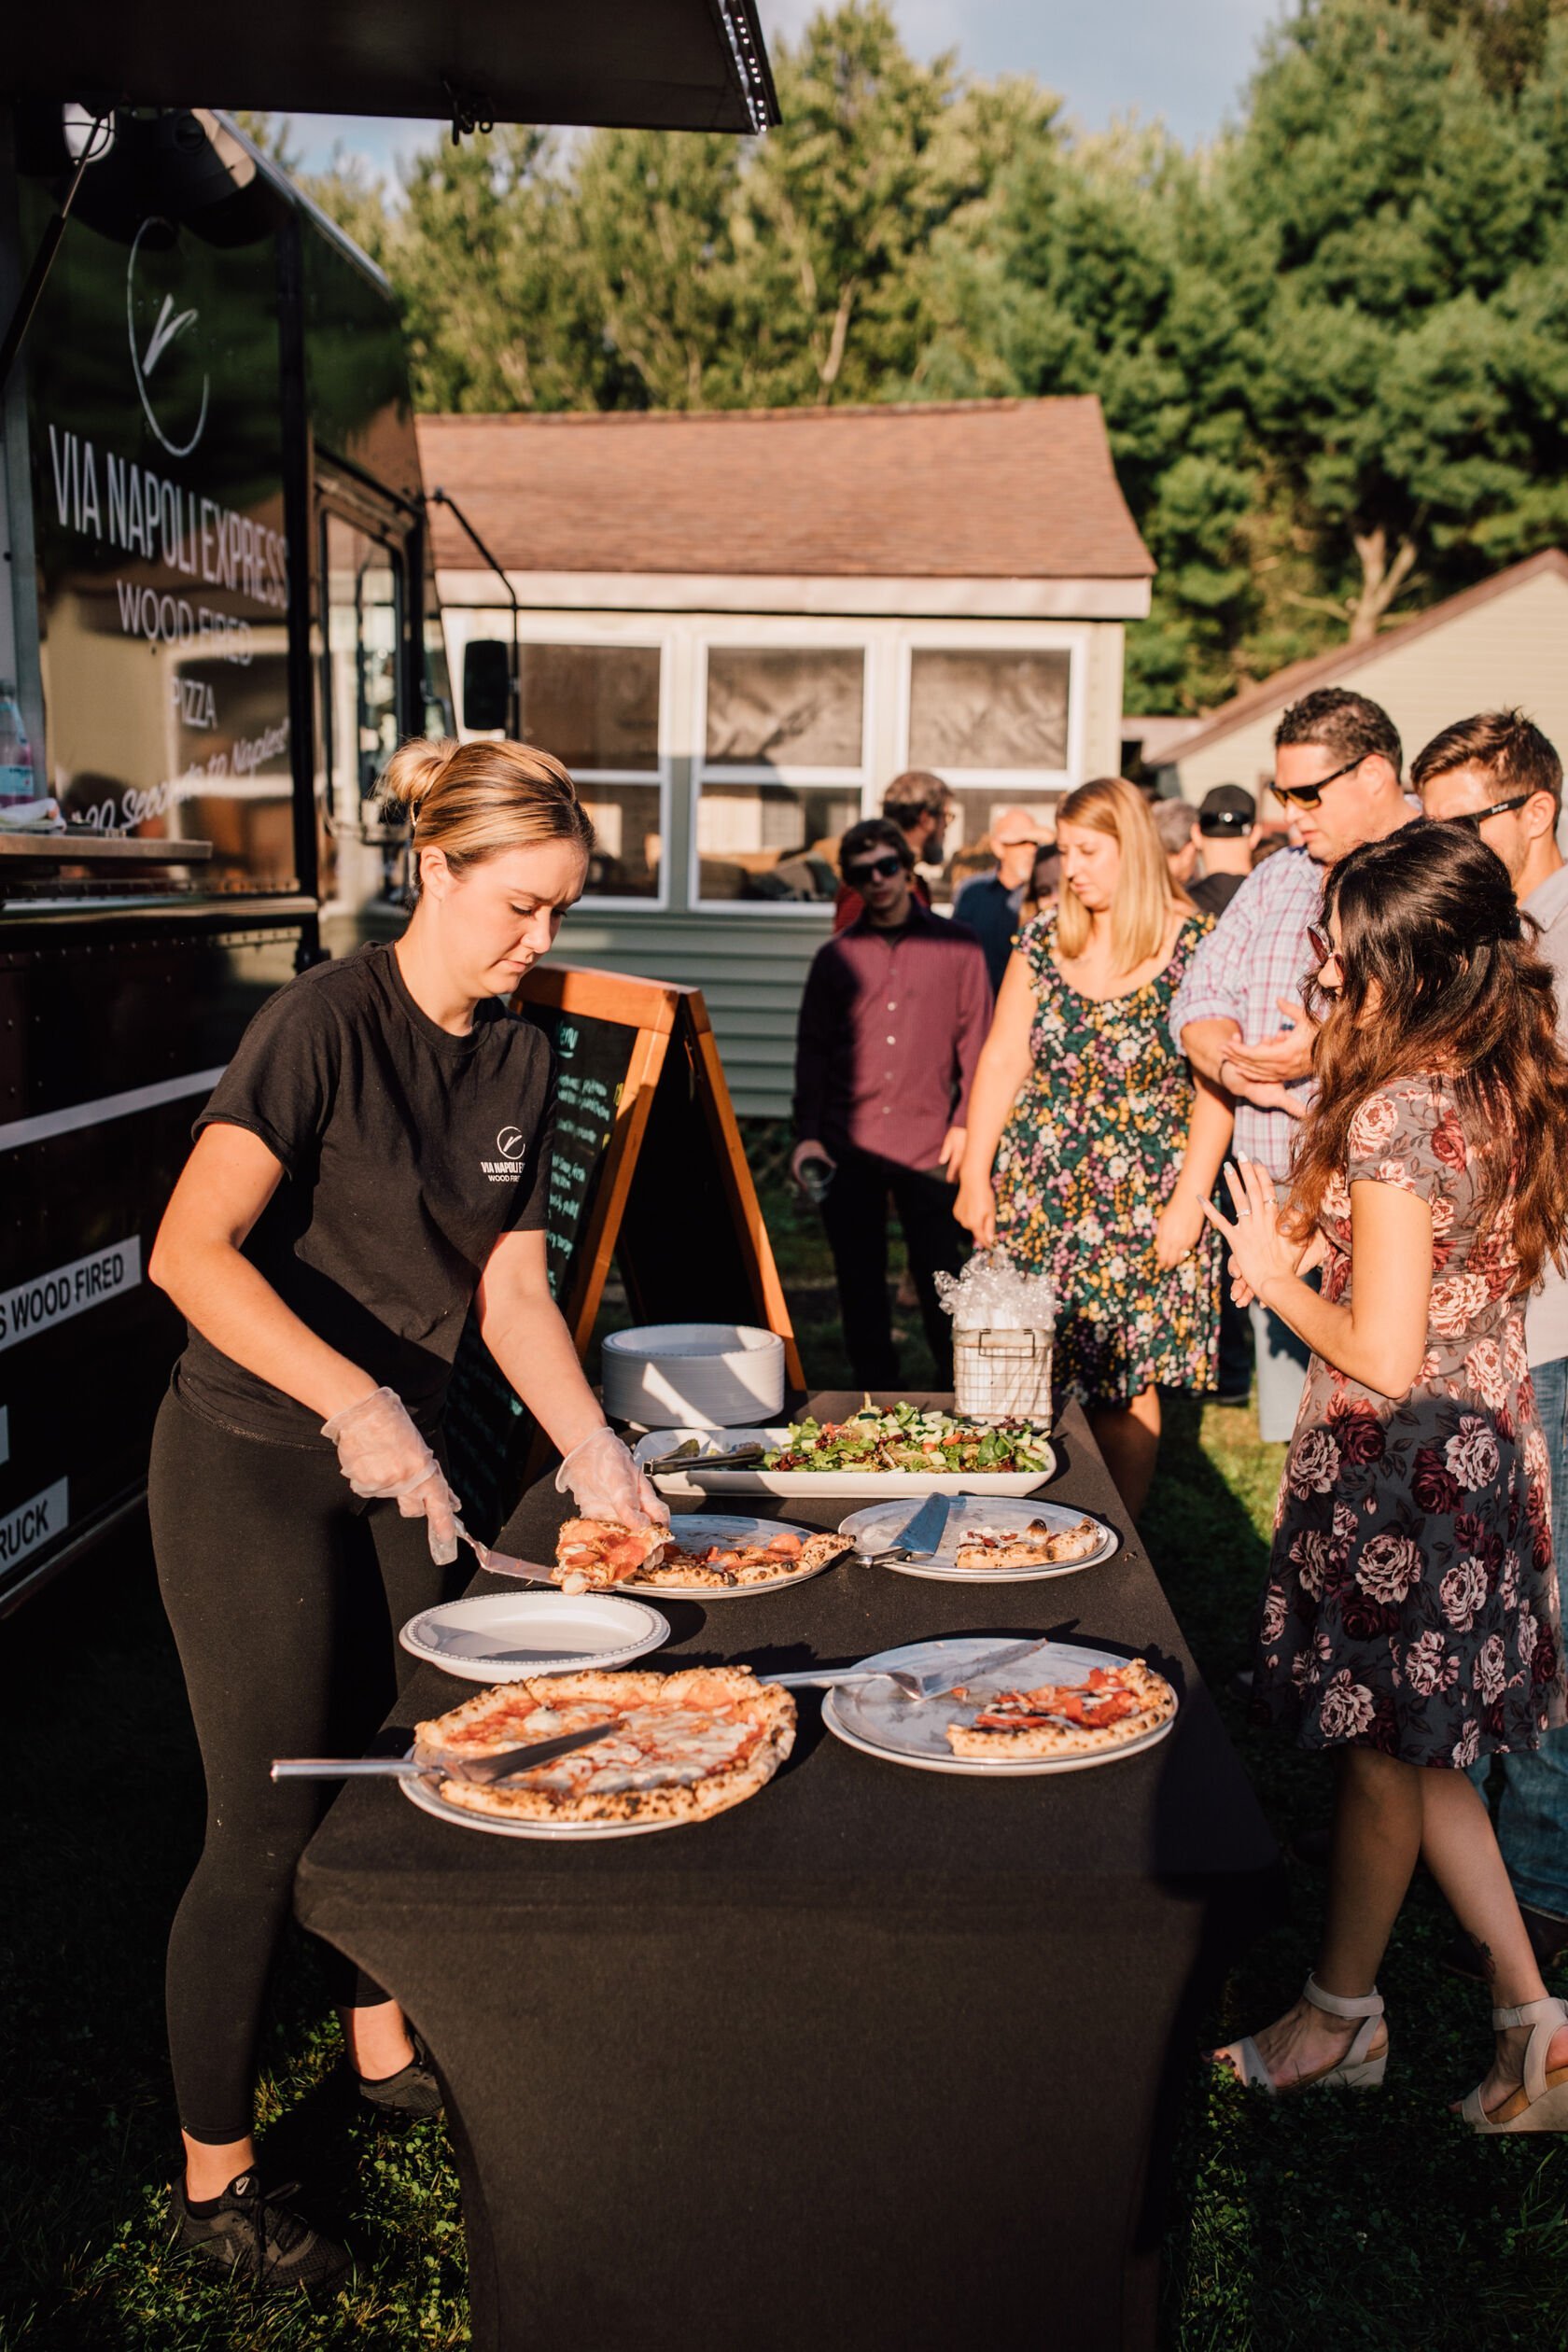  Via Napoli Express Food Truck serves guests at a backyard wedding reception 